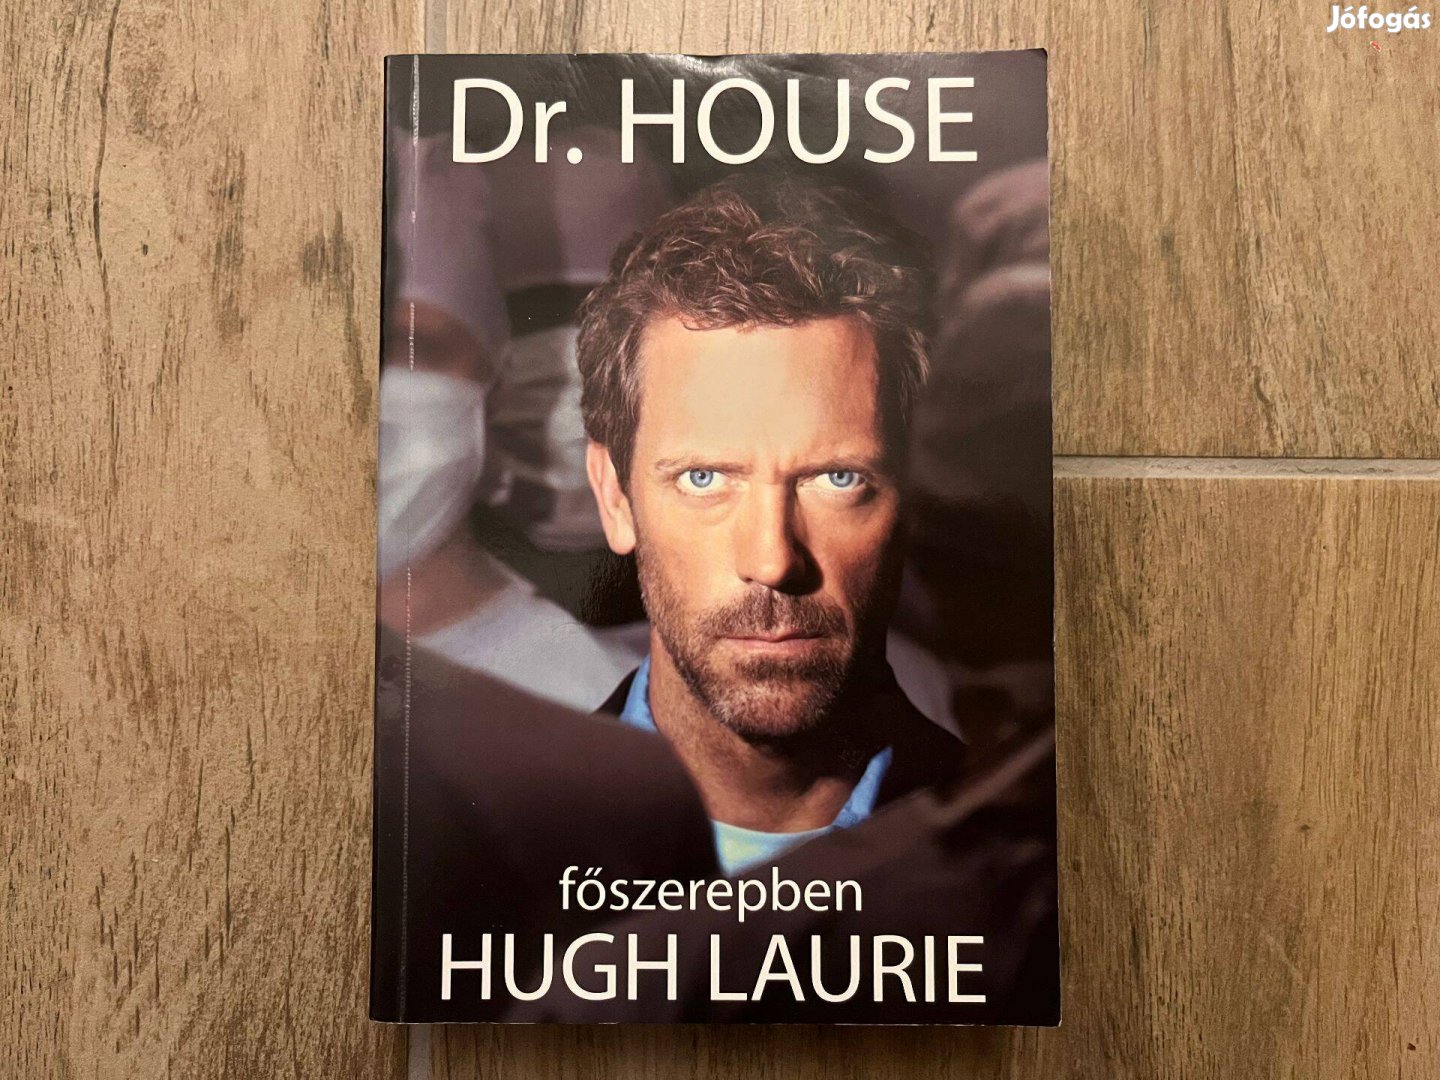 Paul Challen Dr. House - főszerepben Hugh Laurie